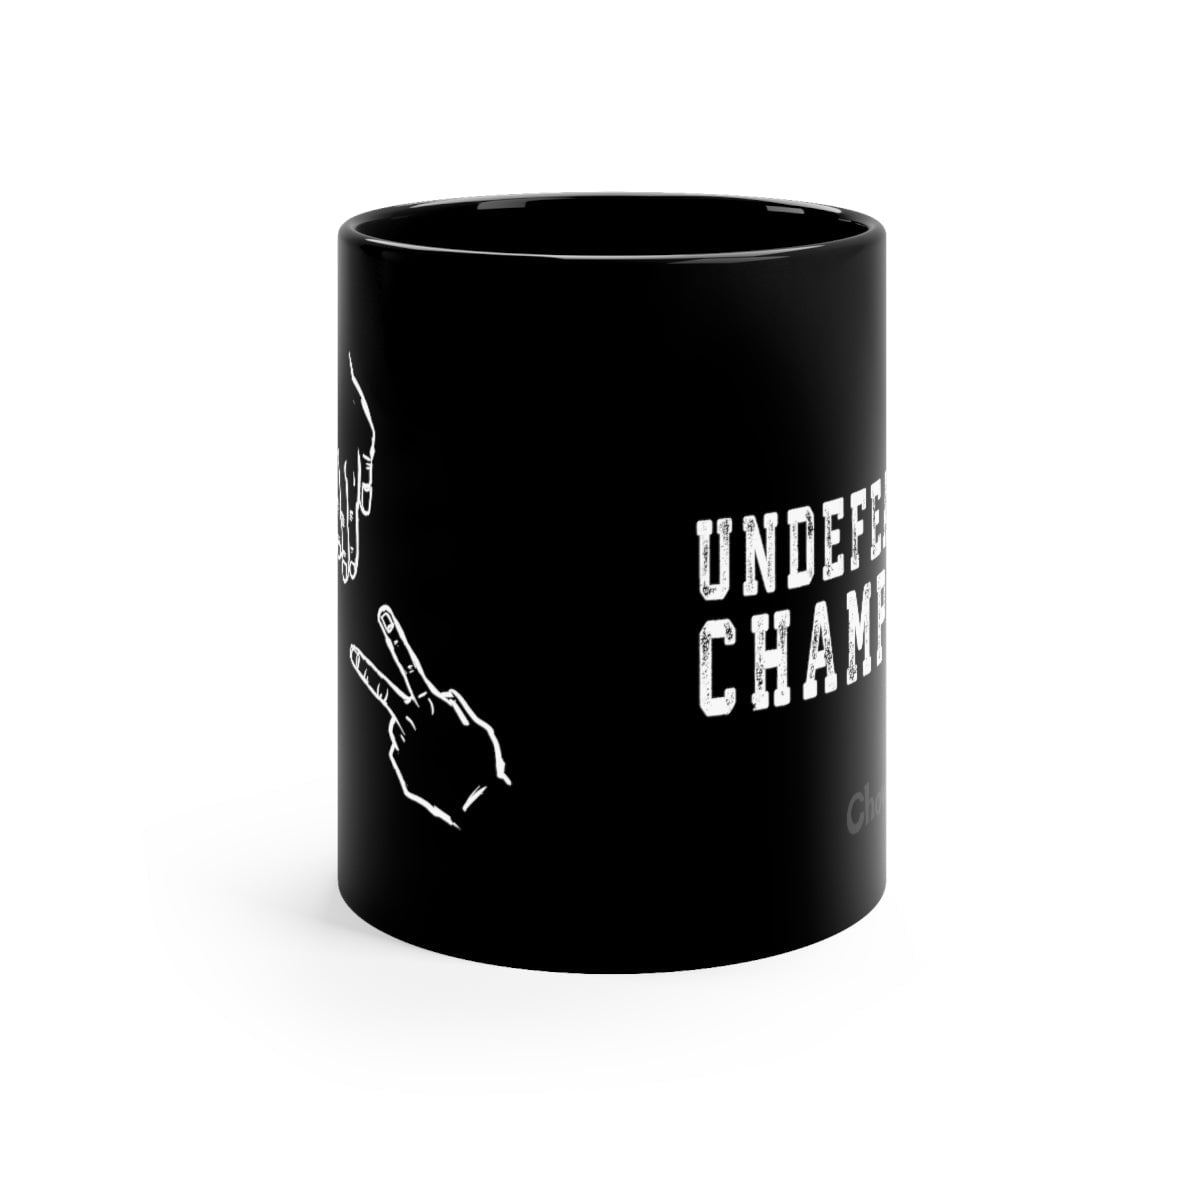 Undefeated Champion 11oz Coffee Mug - Chowdaheadz